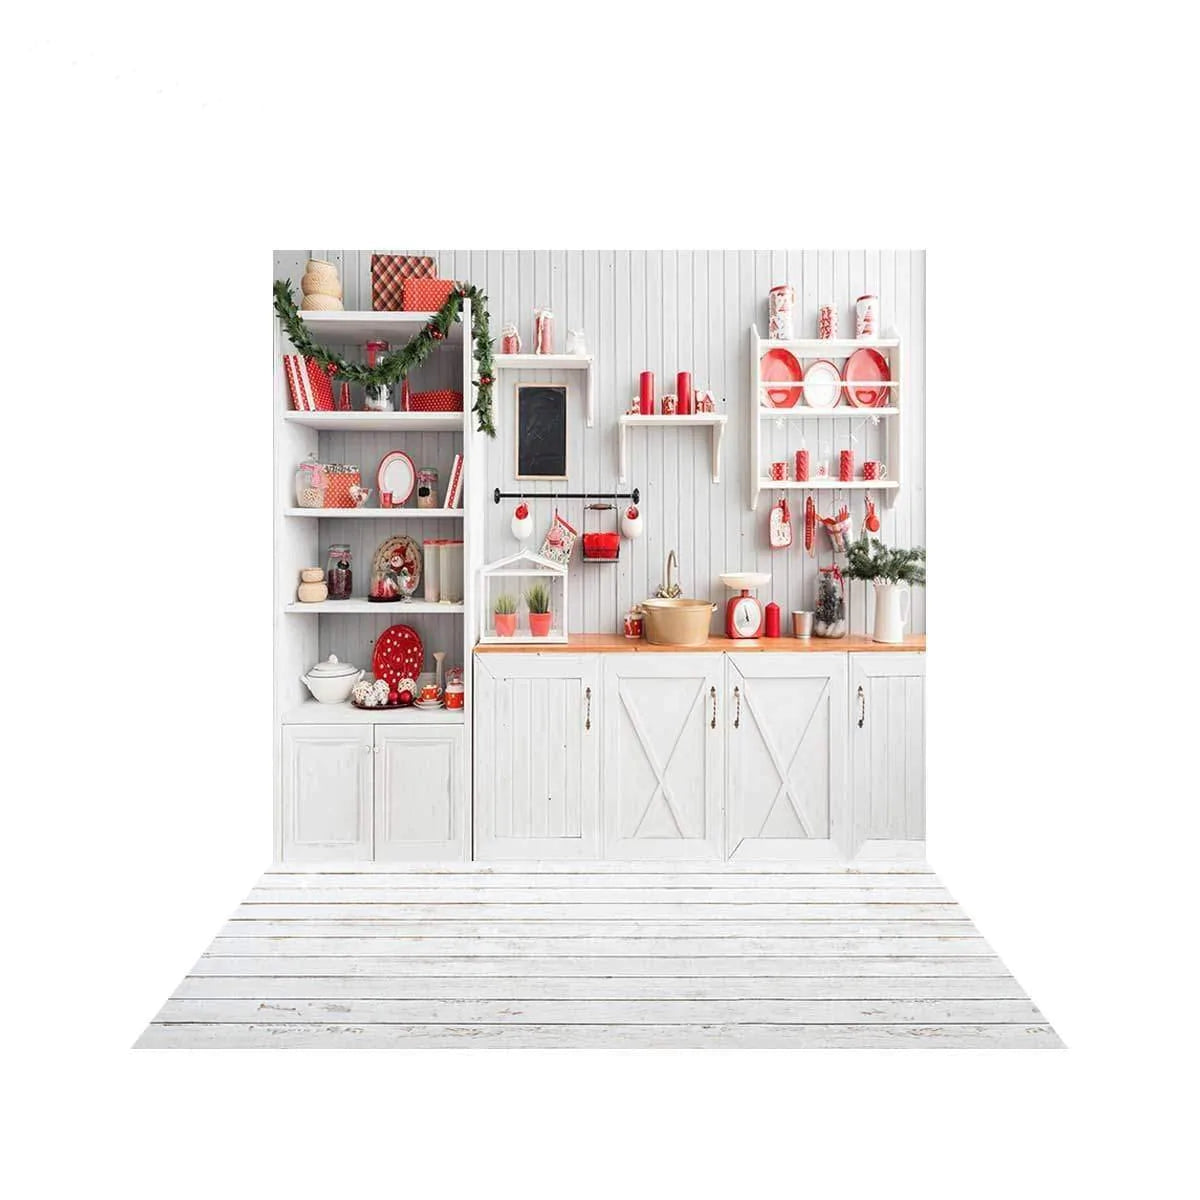 Allenjoy Christmas White Cabinet Cookie Backdrop for Minisession - Allenjoystudio